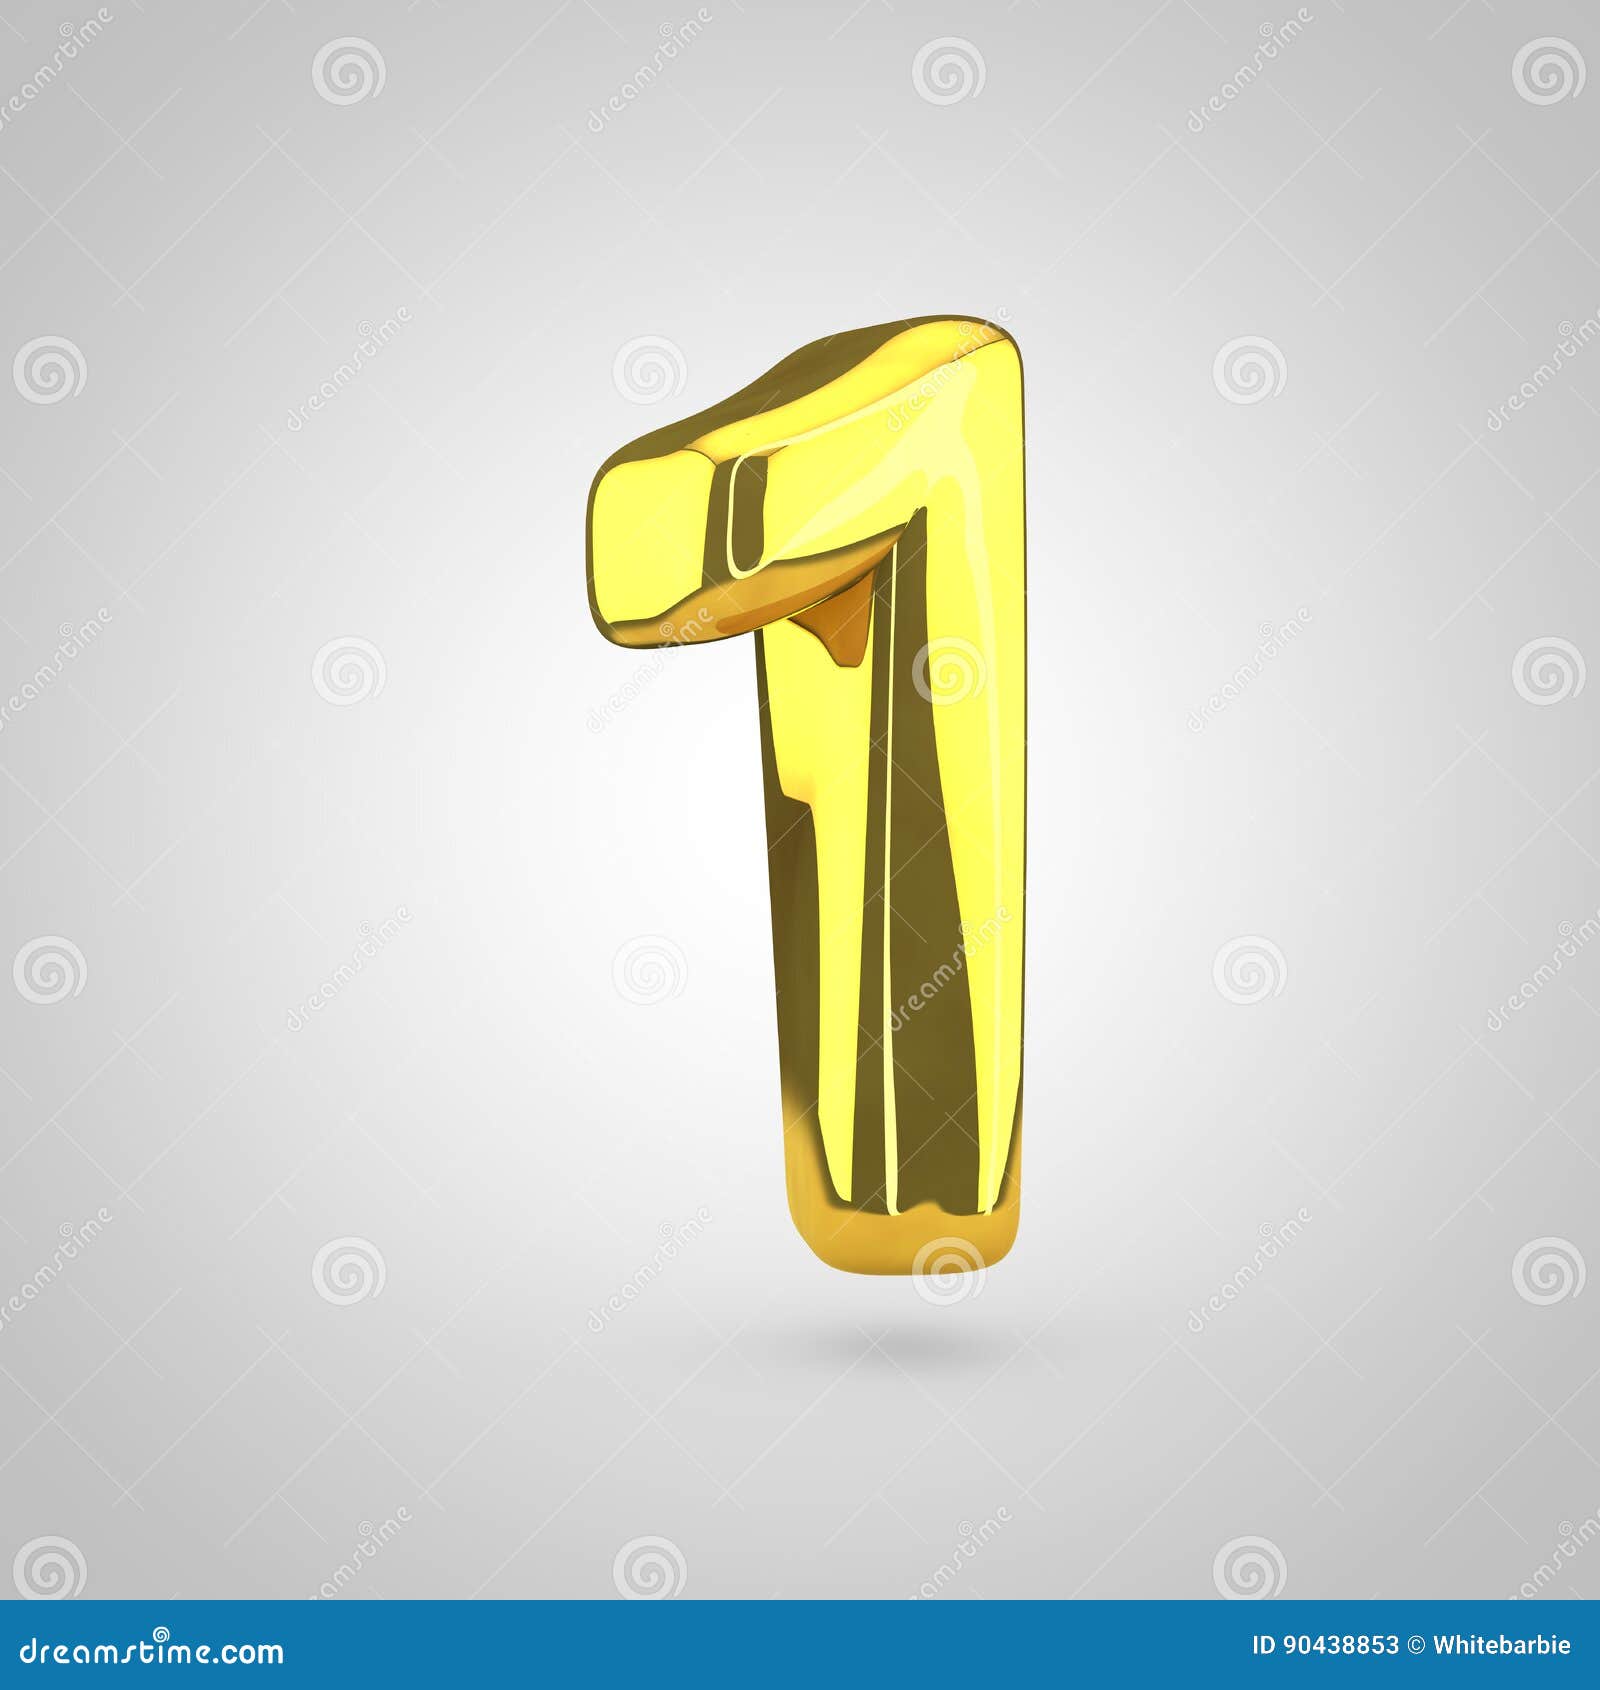 Golden number 1 on white background. Golden number 1. 3D rendering of golden twisted font on white background.